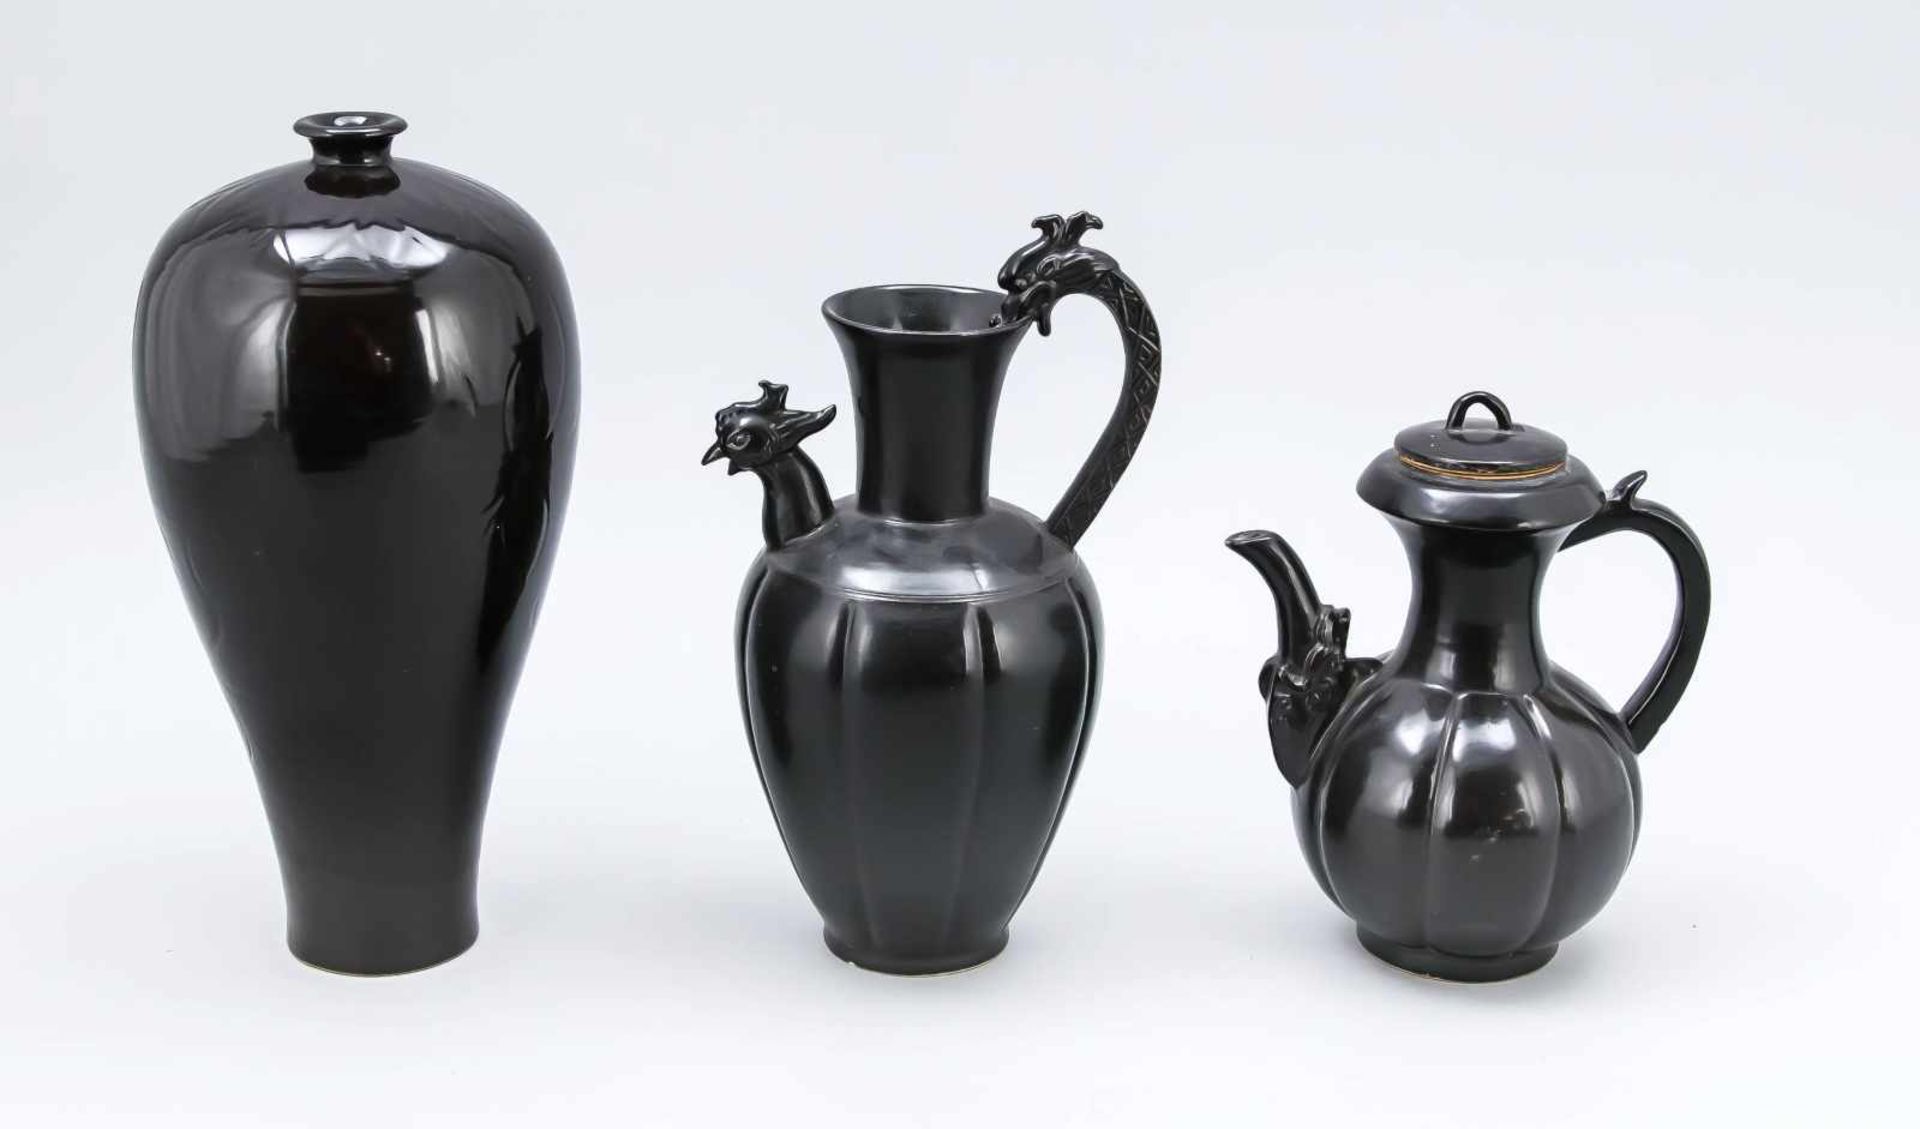 3 x Keramik mit monochromer Glasur in Schwarz, China, 20. Jh., im Stile alterSong-Keramik. 1 x